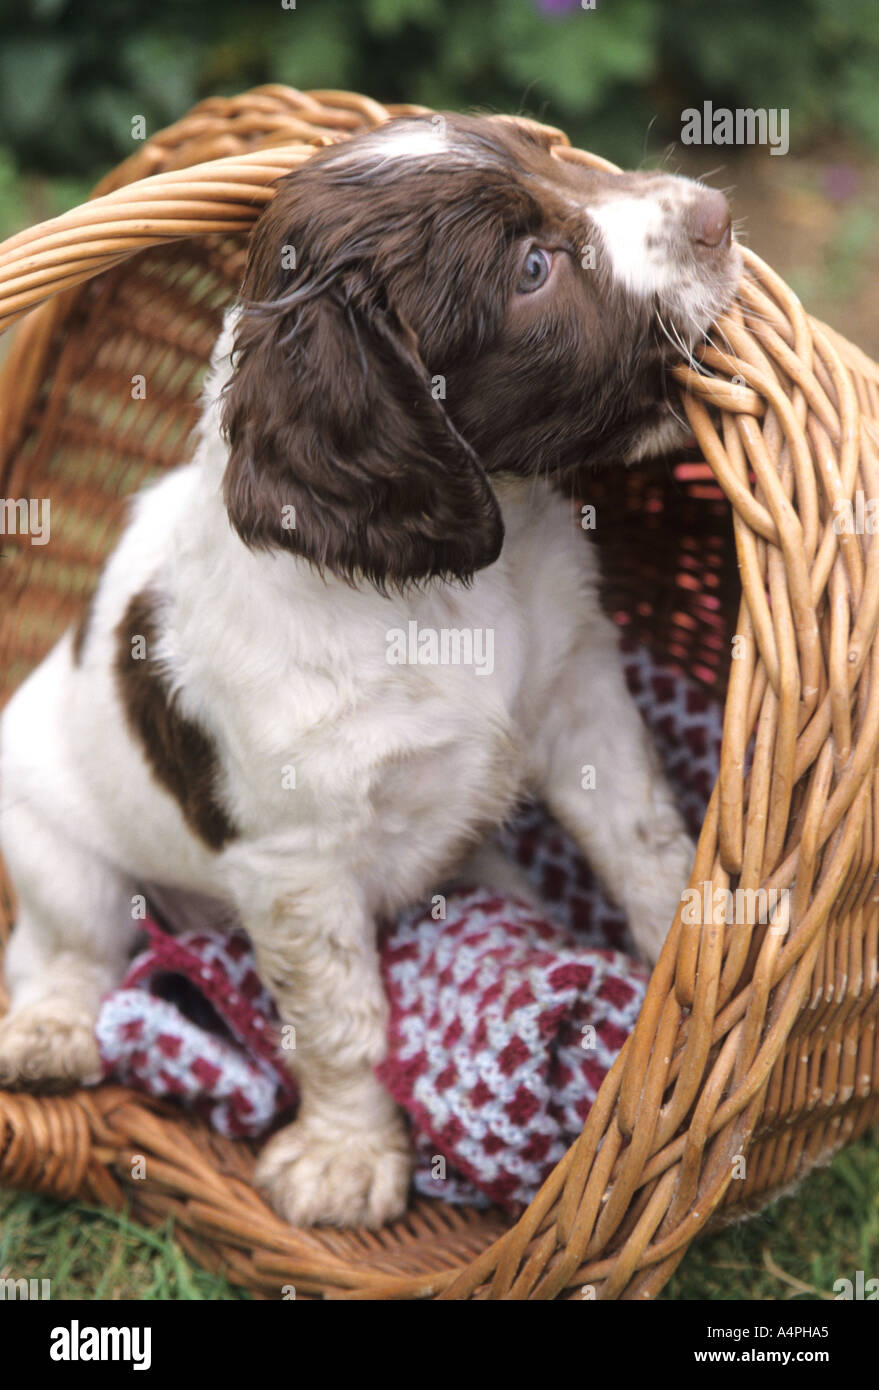 English Springer Spaniel puppy sitting in basket Stock Photo